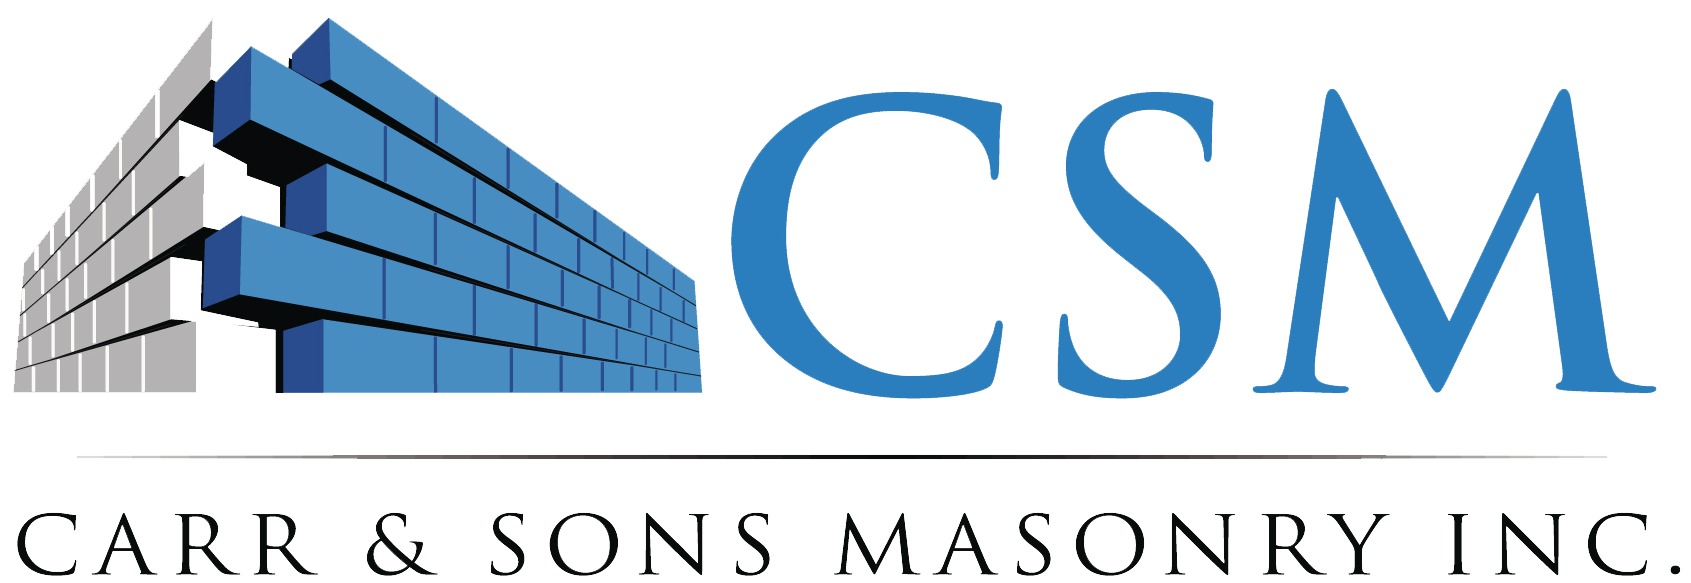 Carr & Sons Masonry, Inc logo